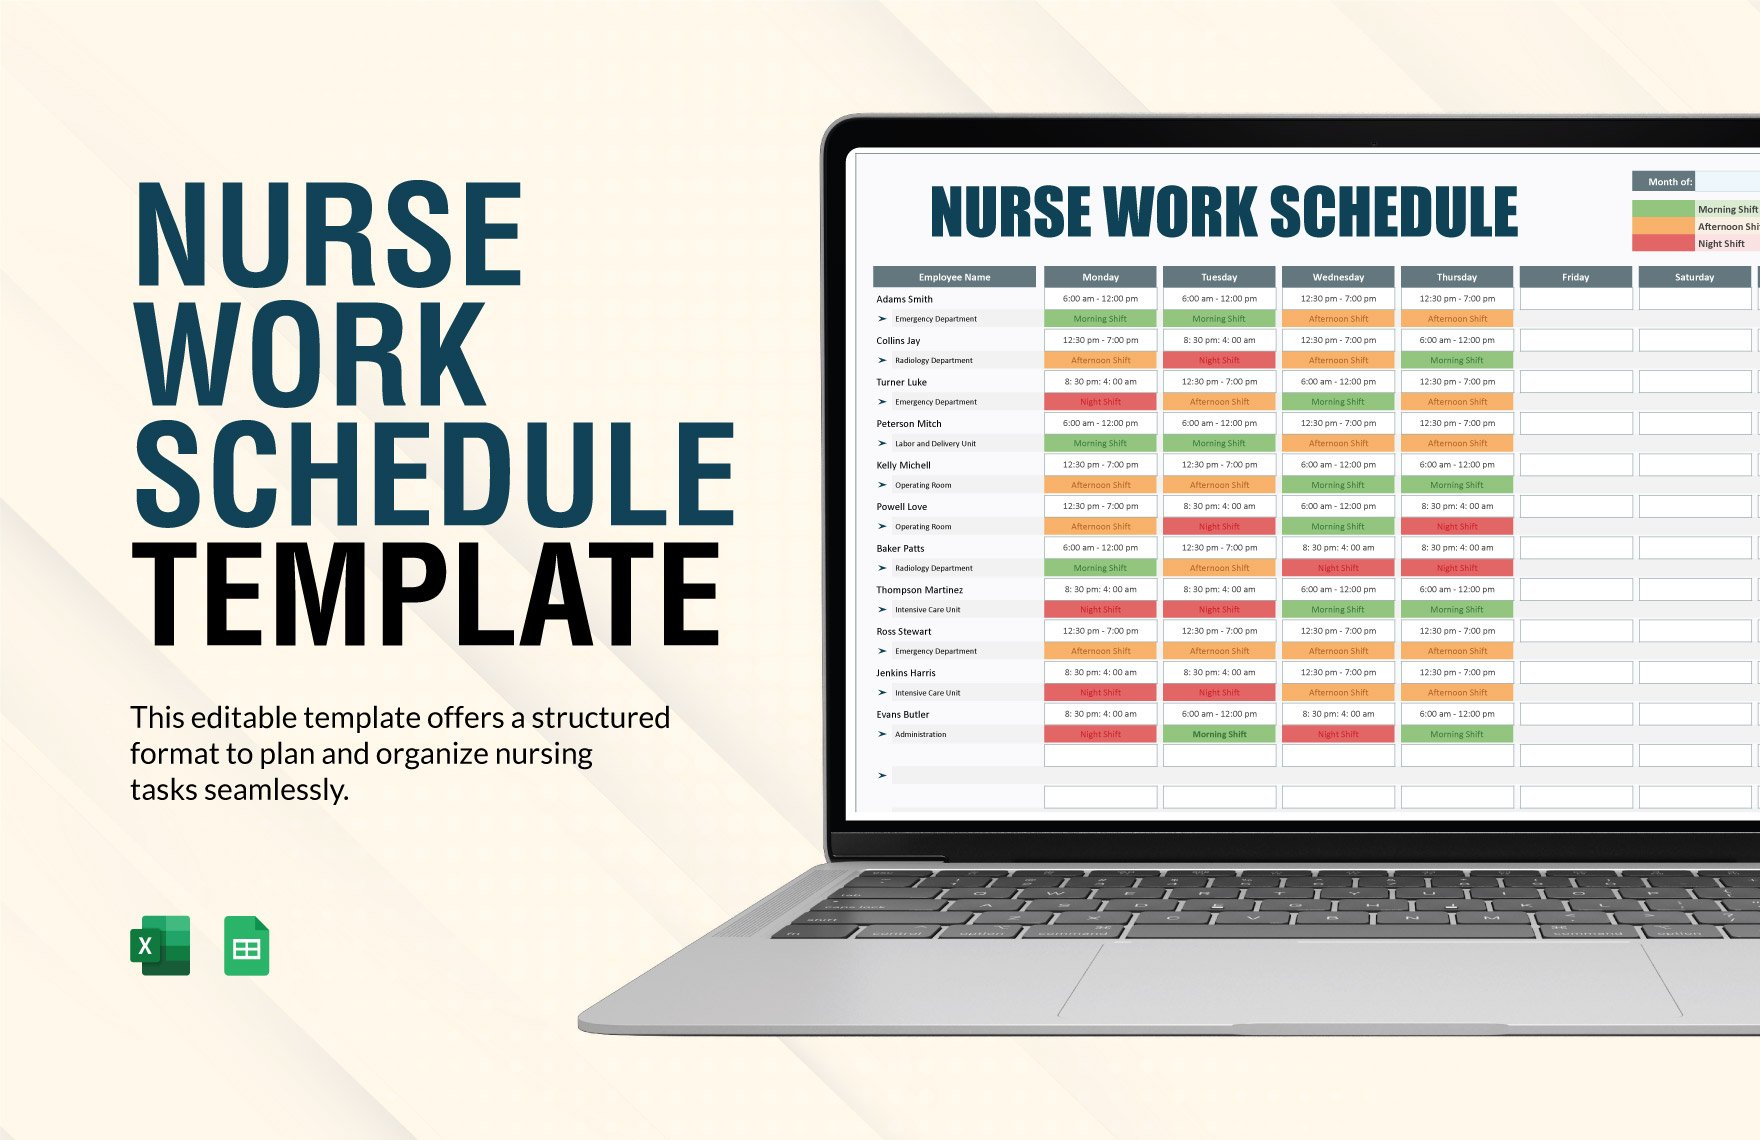 Nurse Work Schedule Template in Excel, Google Sheets